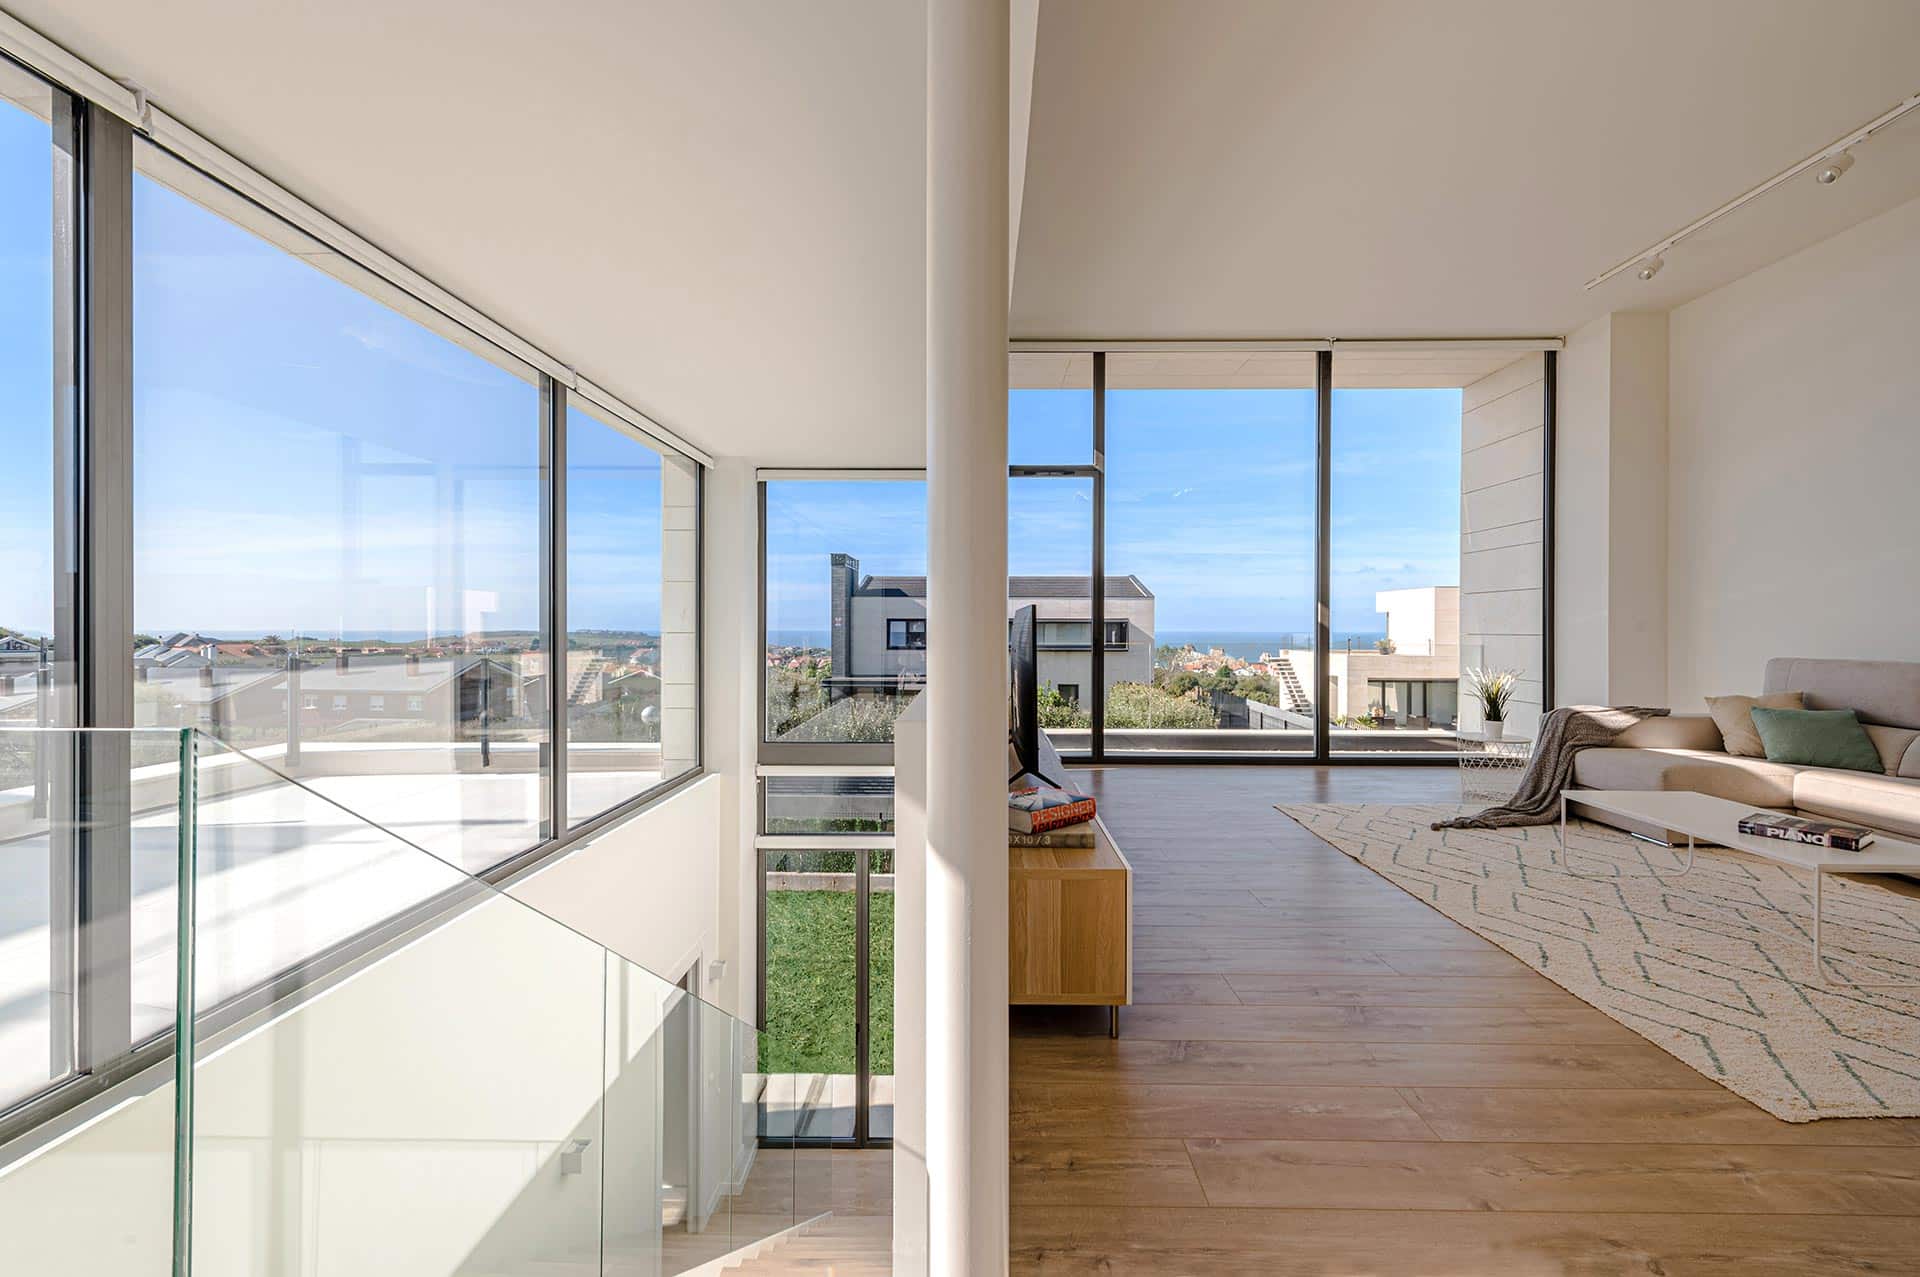 Salón abierto a escalera en casa moderna con grandes cristaleras diseñada por Moah Arquitectos en Liencres. Cantabria